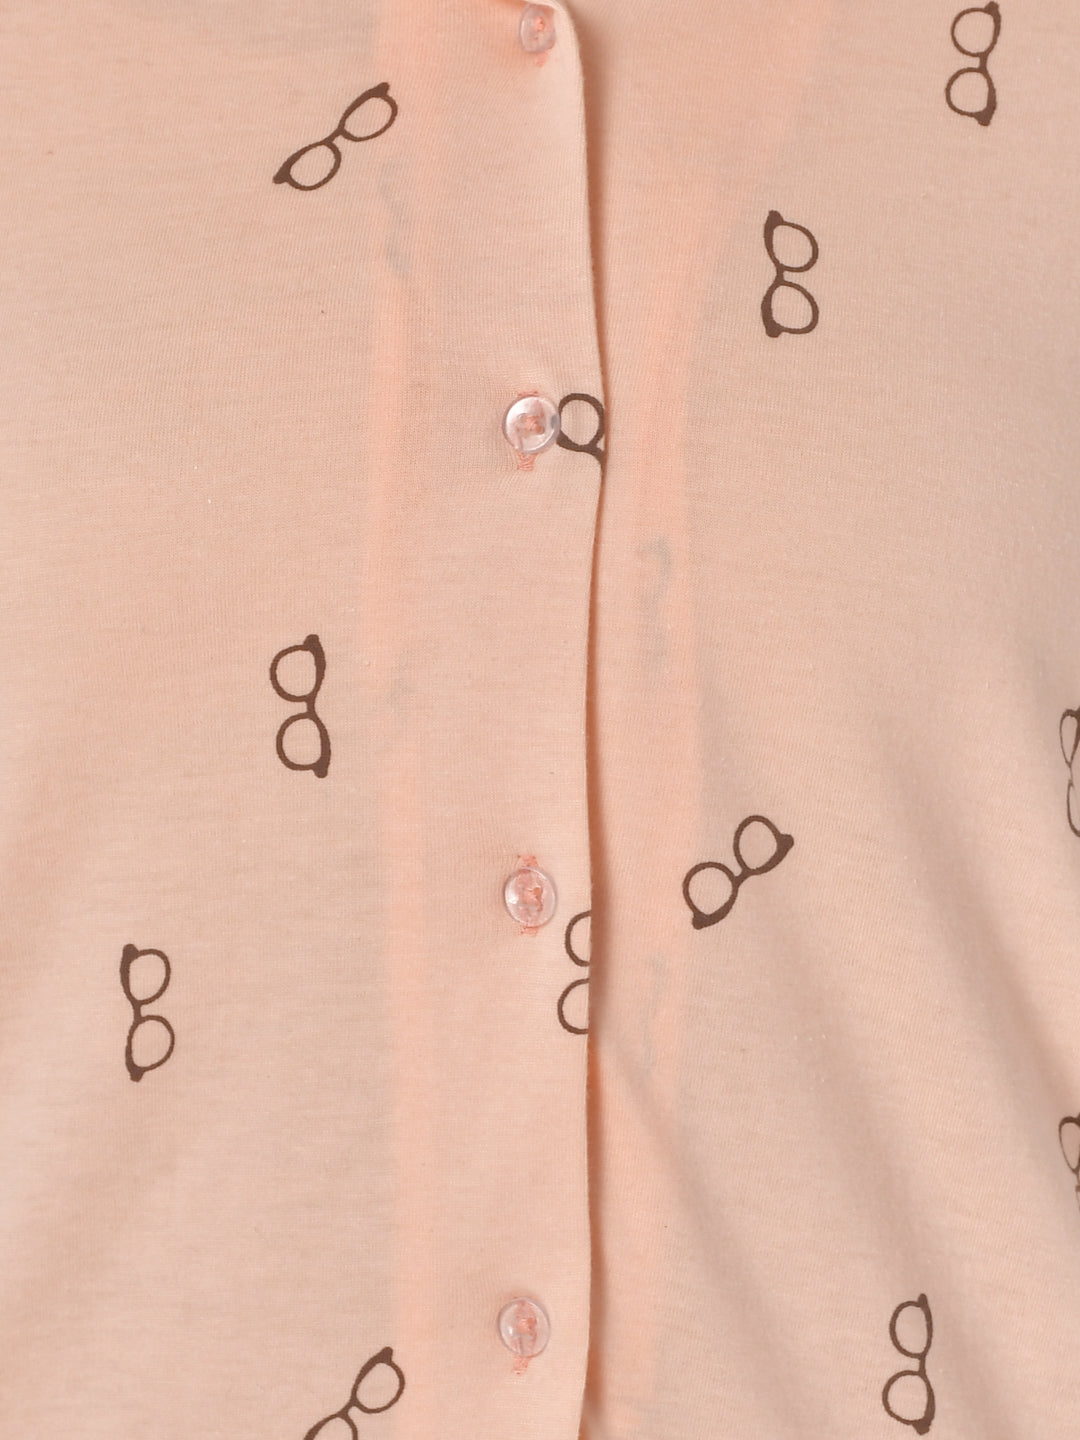 Klamotten Women's Baby Pink Allover Printed Top Pyjama Set N54H